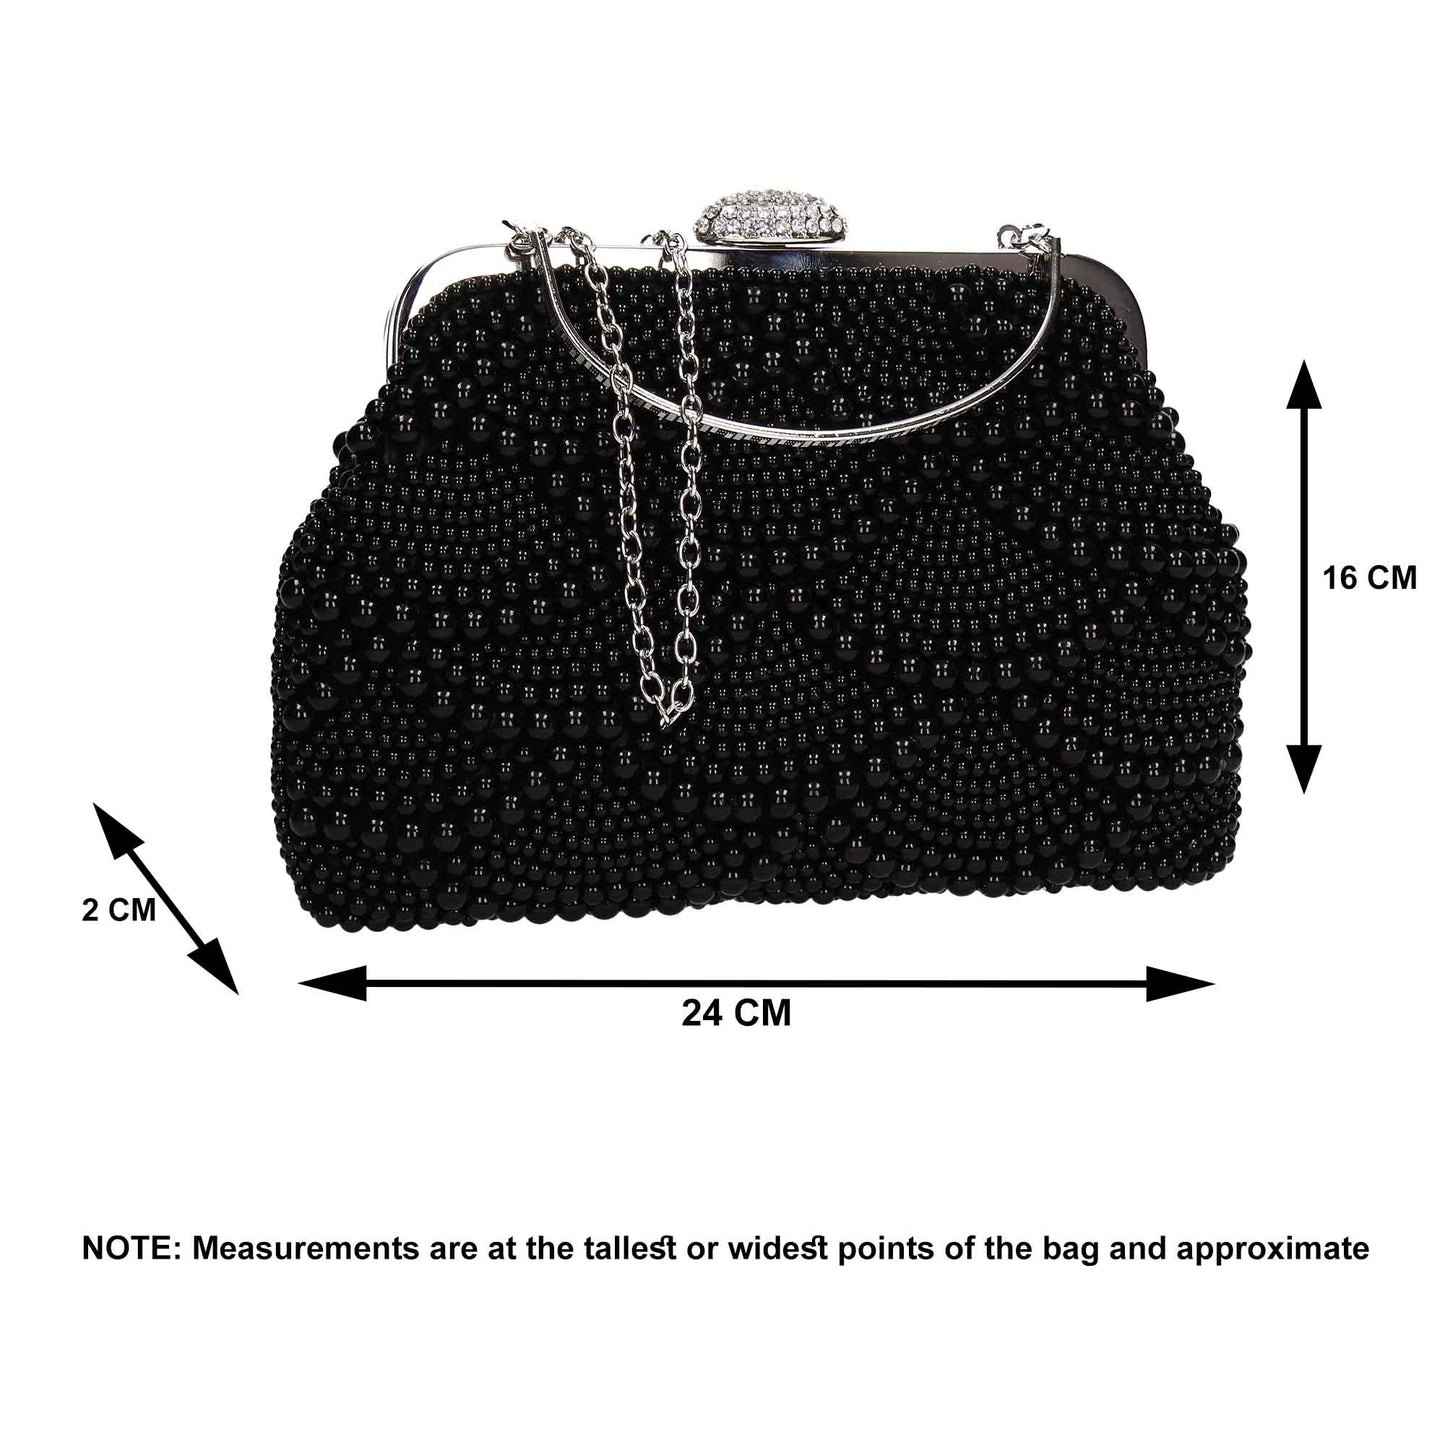 SWANKYSWANS Hailee Faux Pearl Detail Clutch Bag Black Cute Cheap Clutch Bag For Weddings School and Work